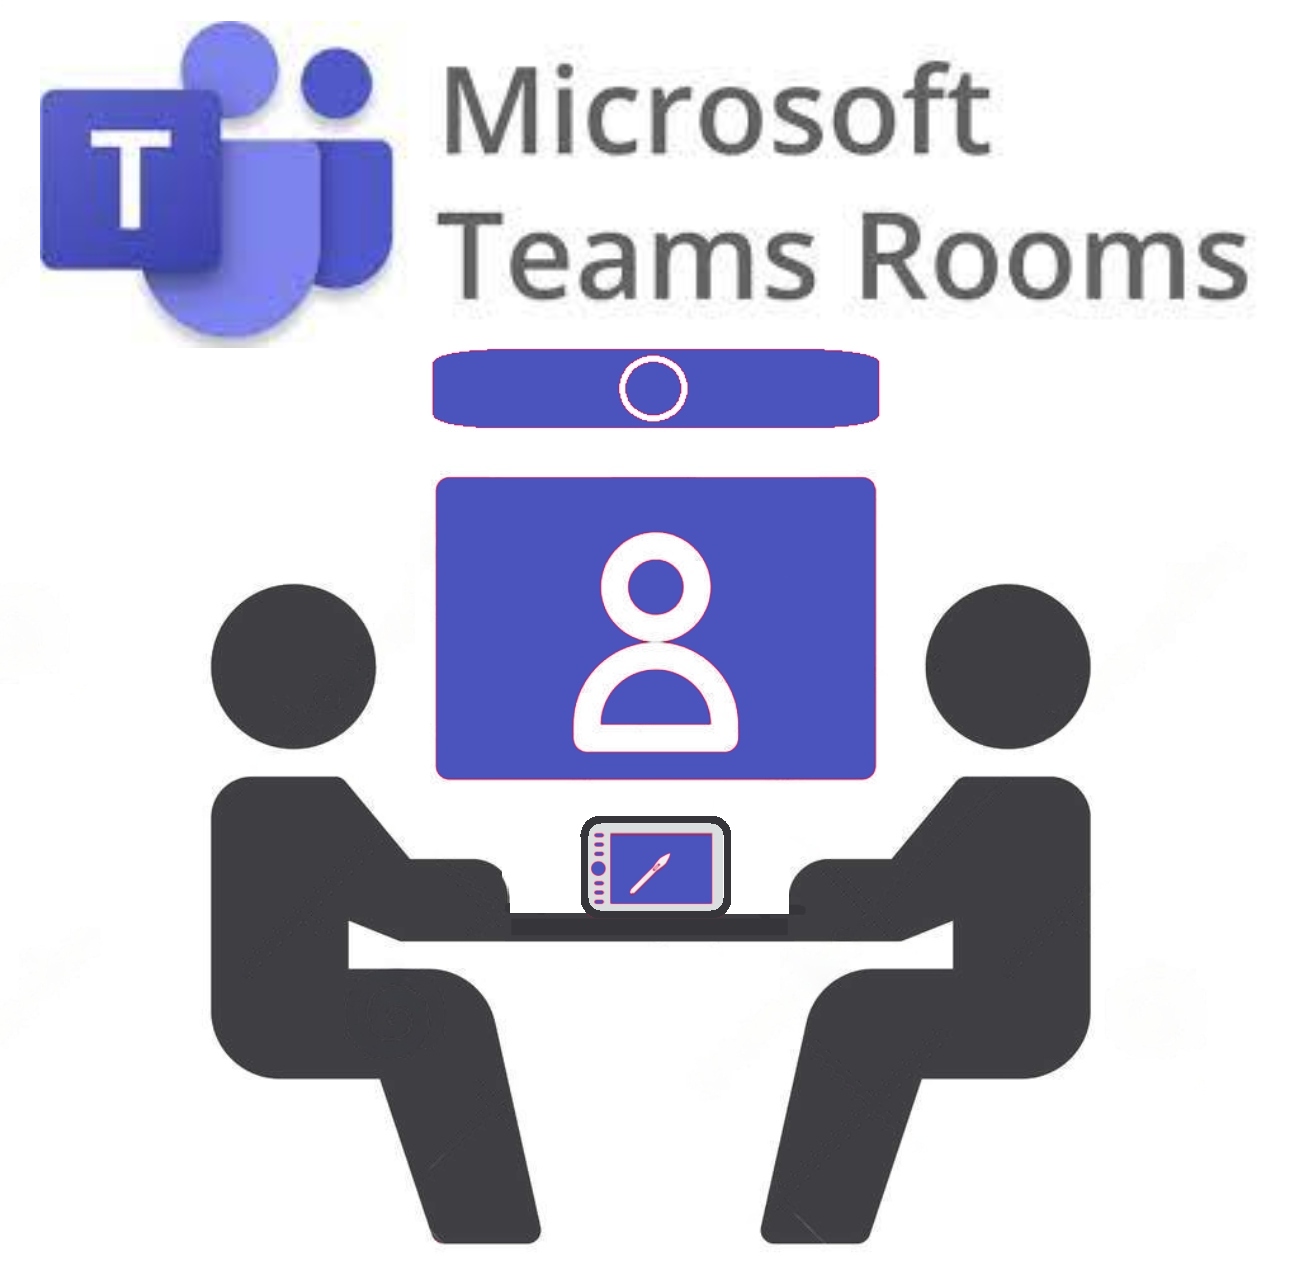 Microsoft Teams Rooms materiaal